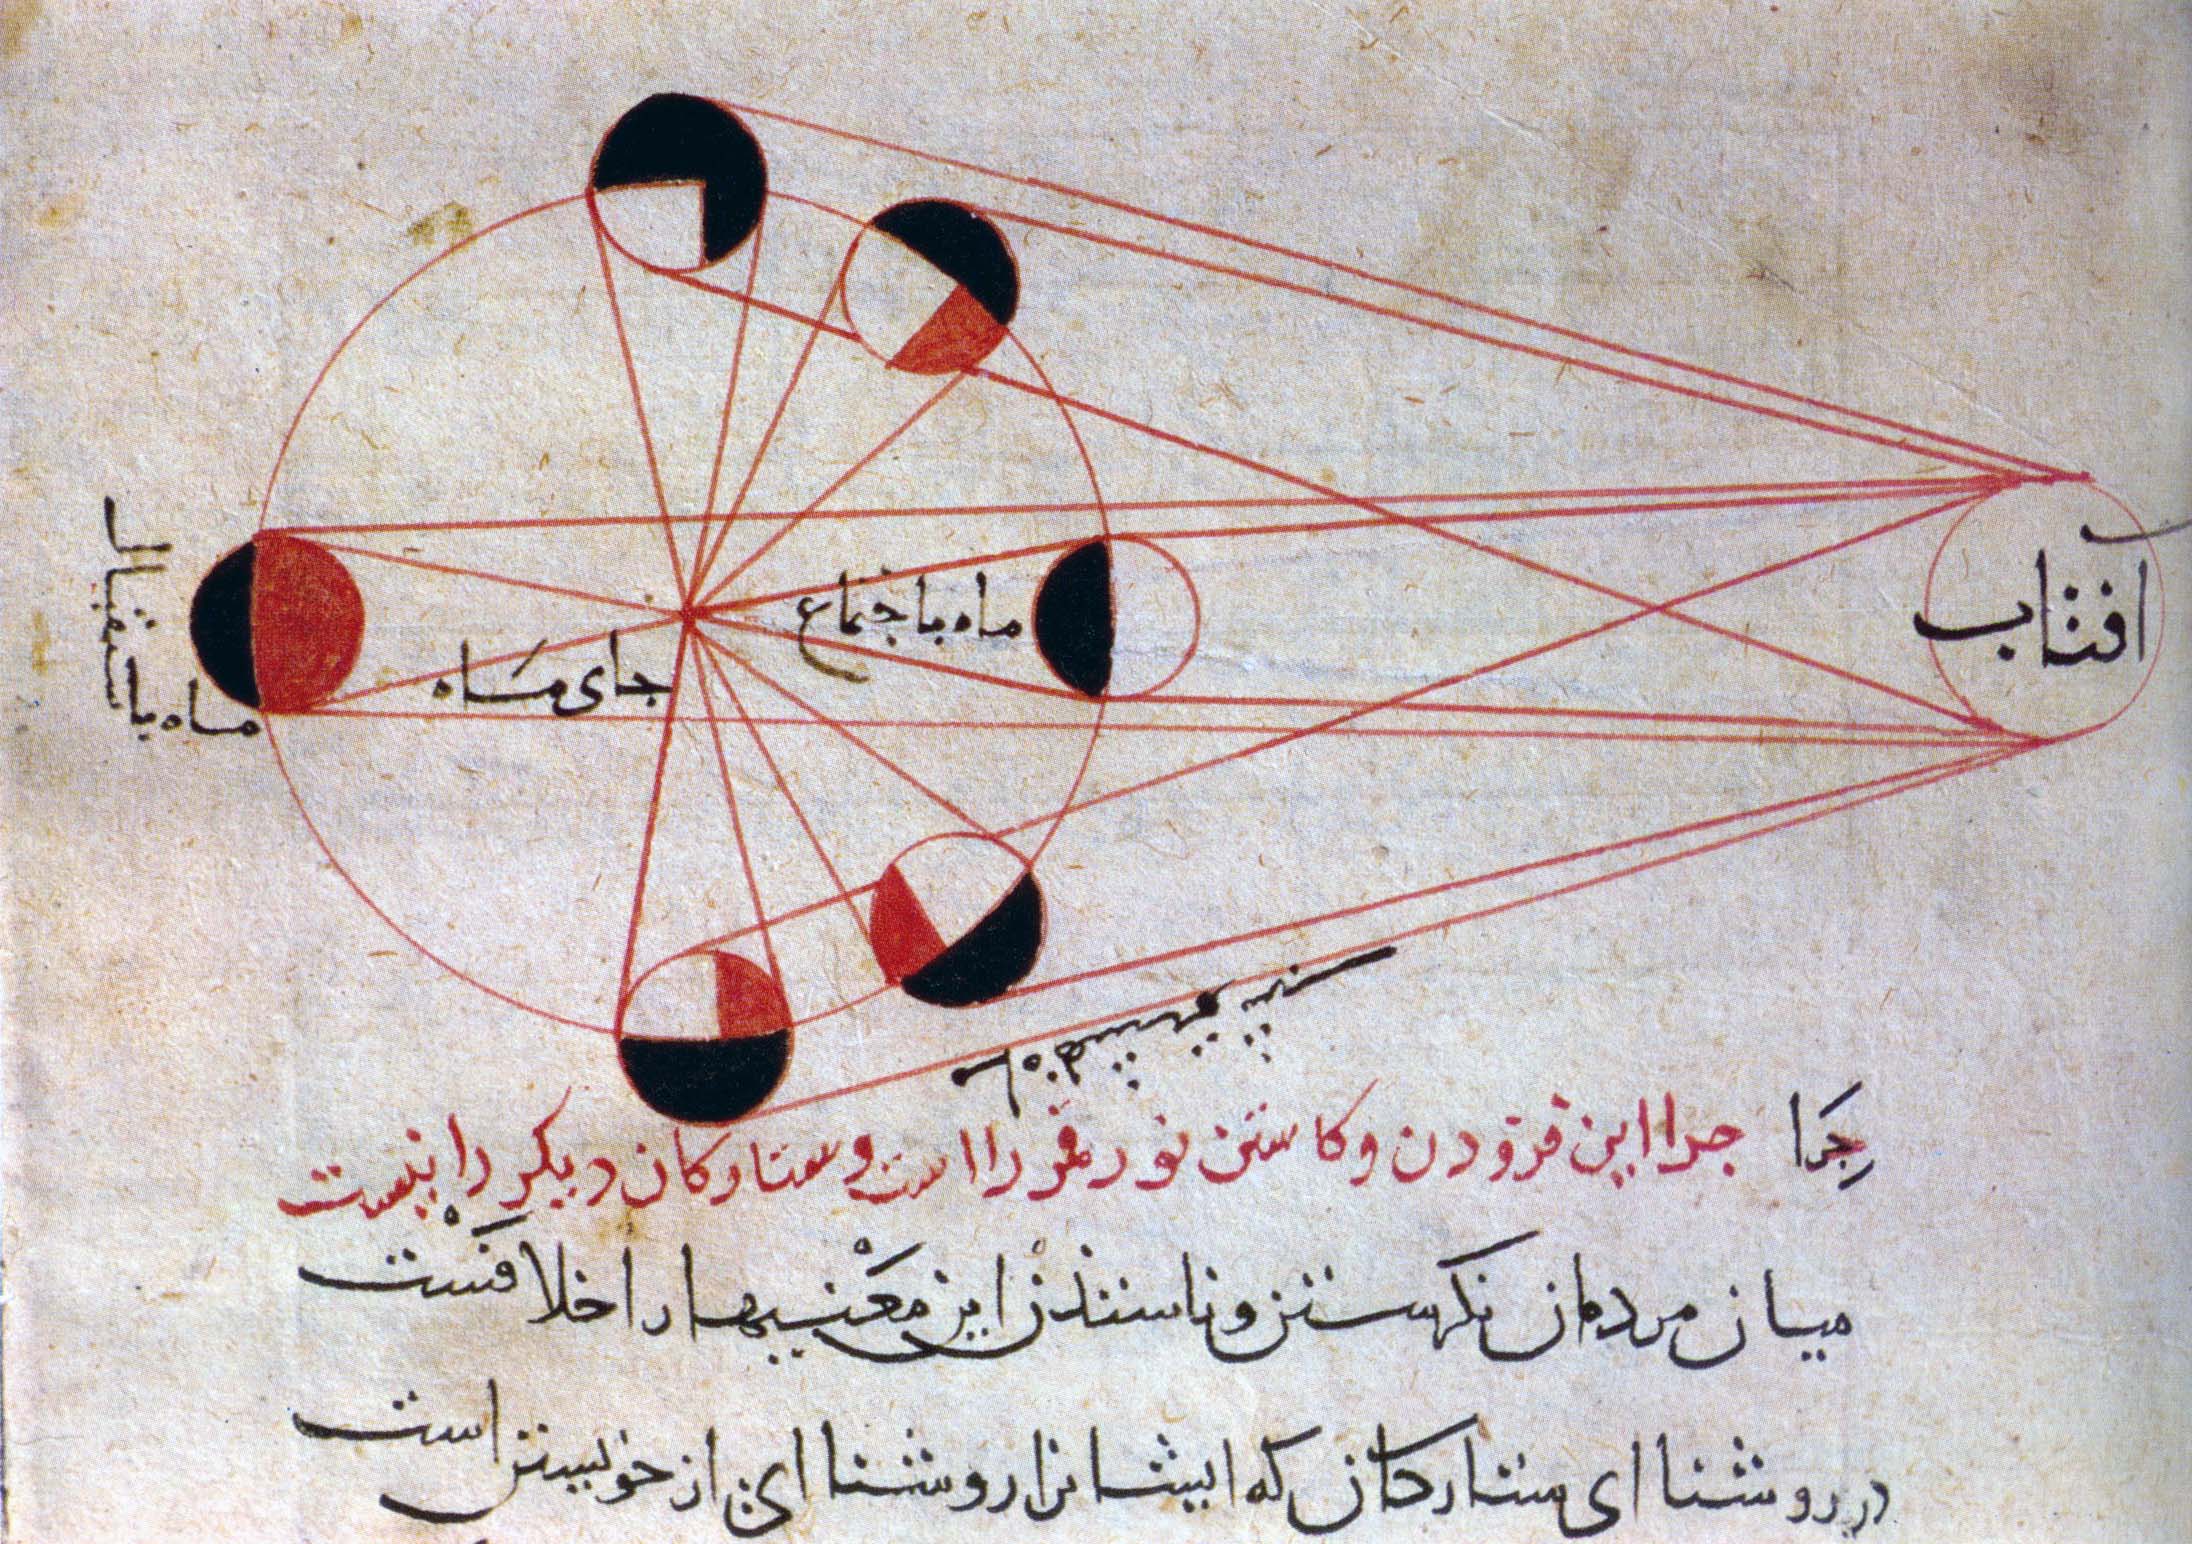 ilm-al-nujum and science of the stars